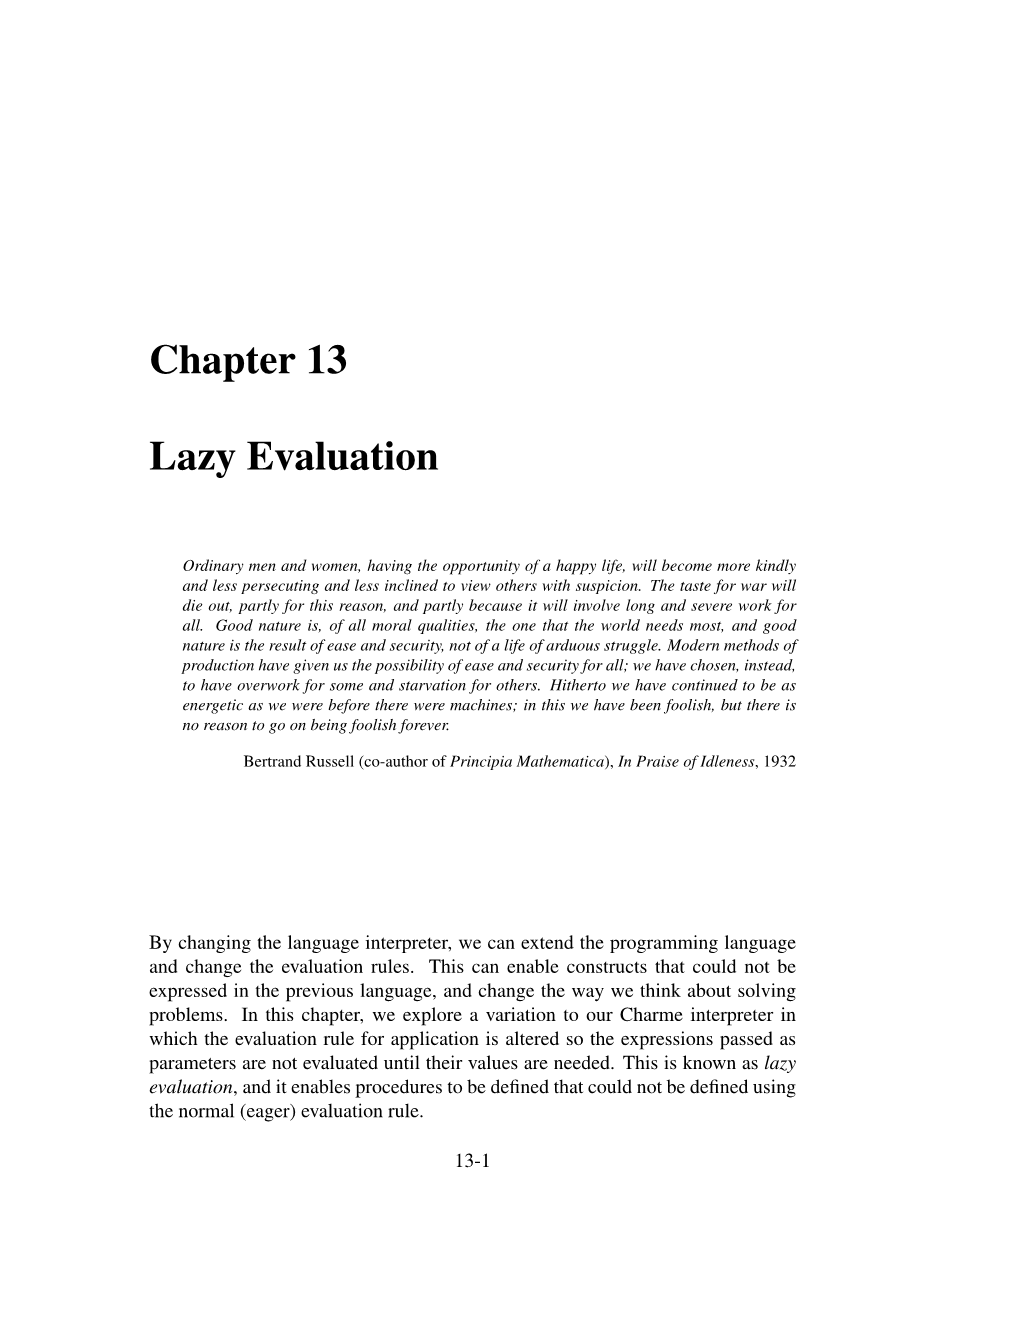 Chapter 13 Lazy Evaluation